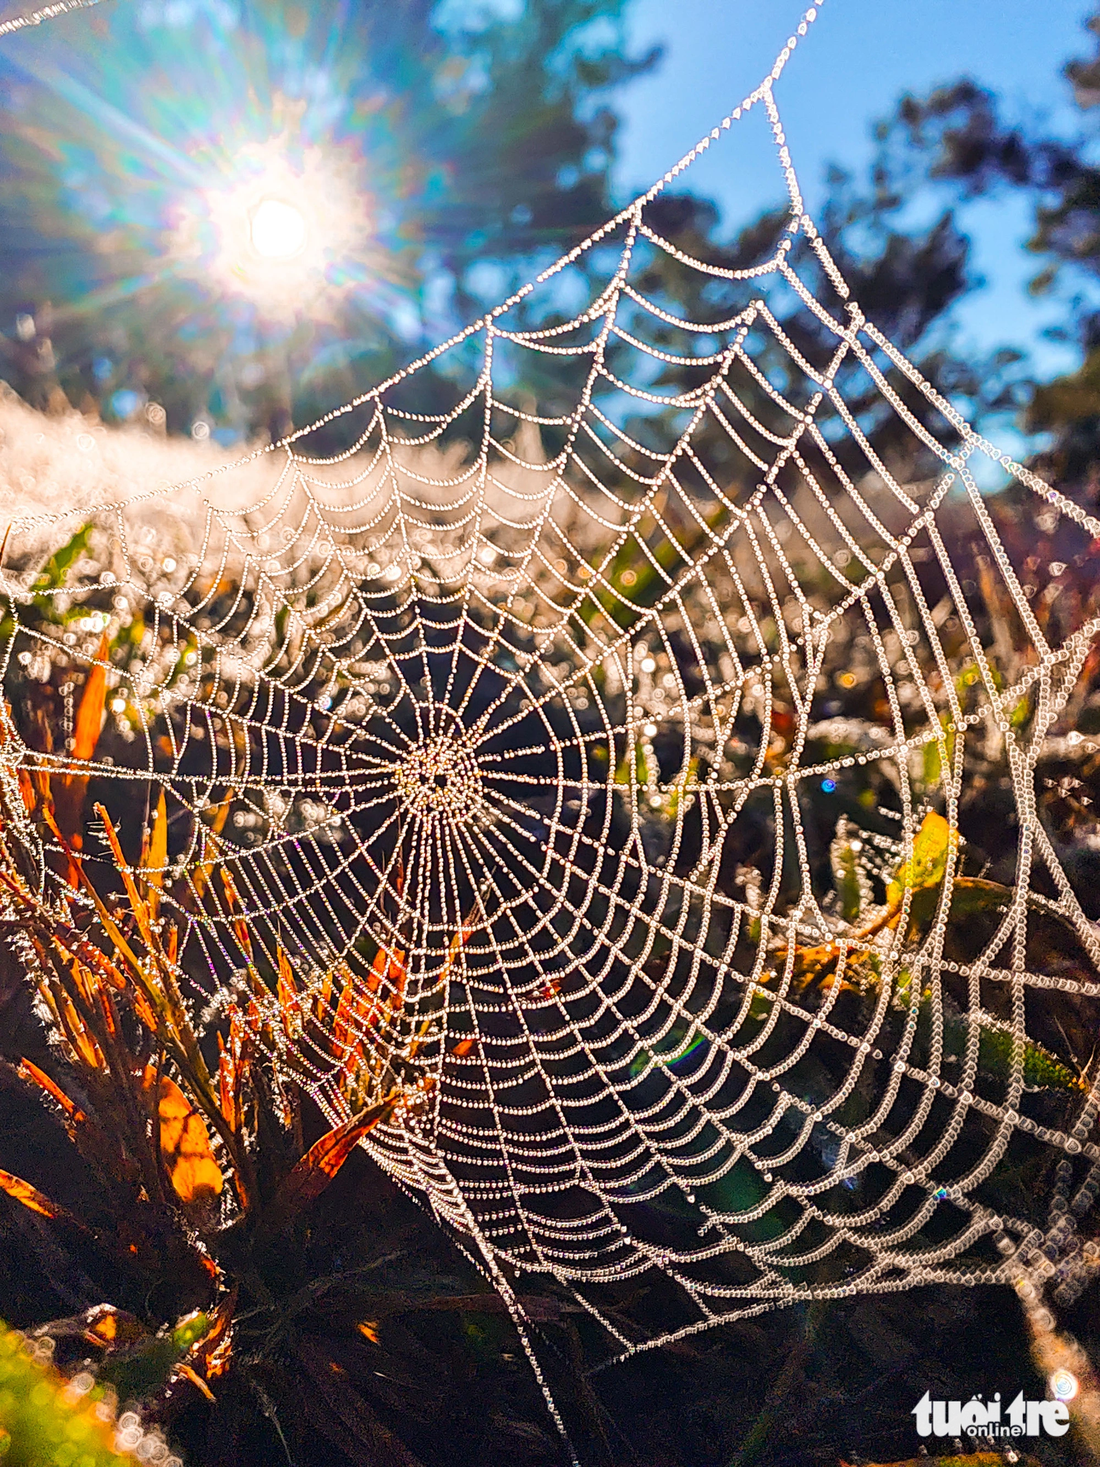 Dew on a cobweb under the sunlight. Photo: Quang Da Lat